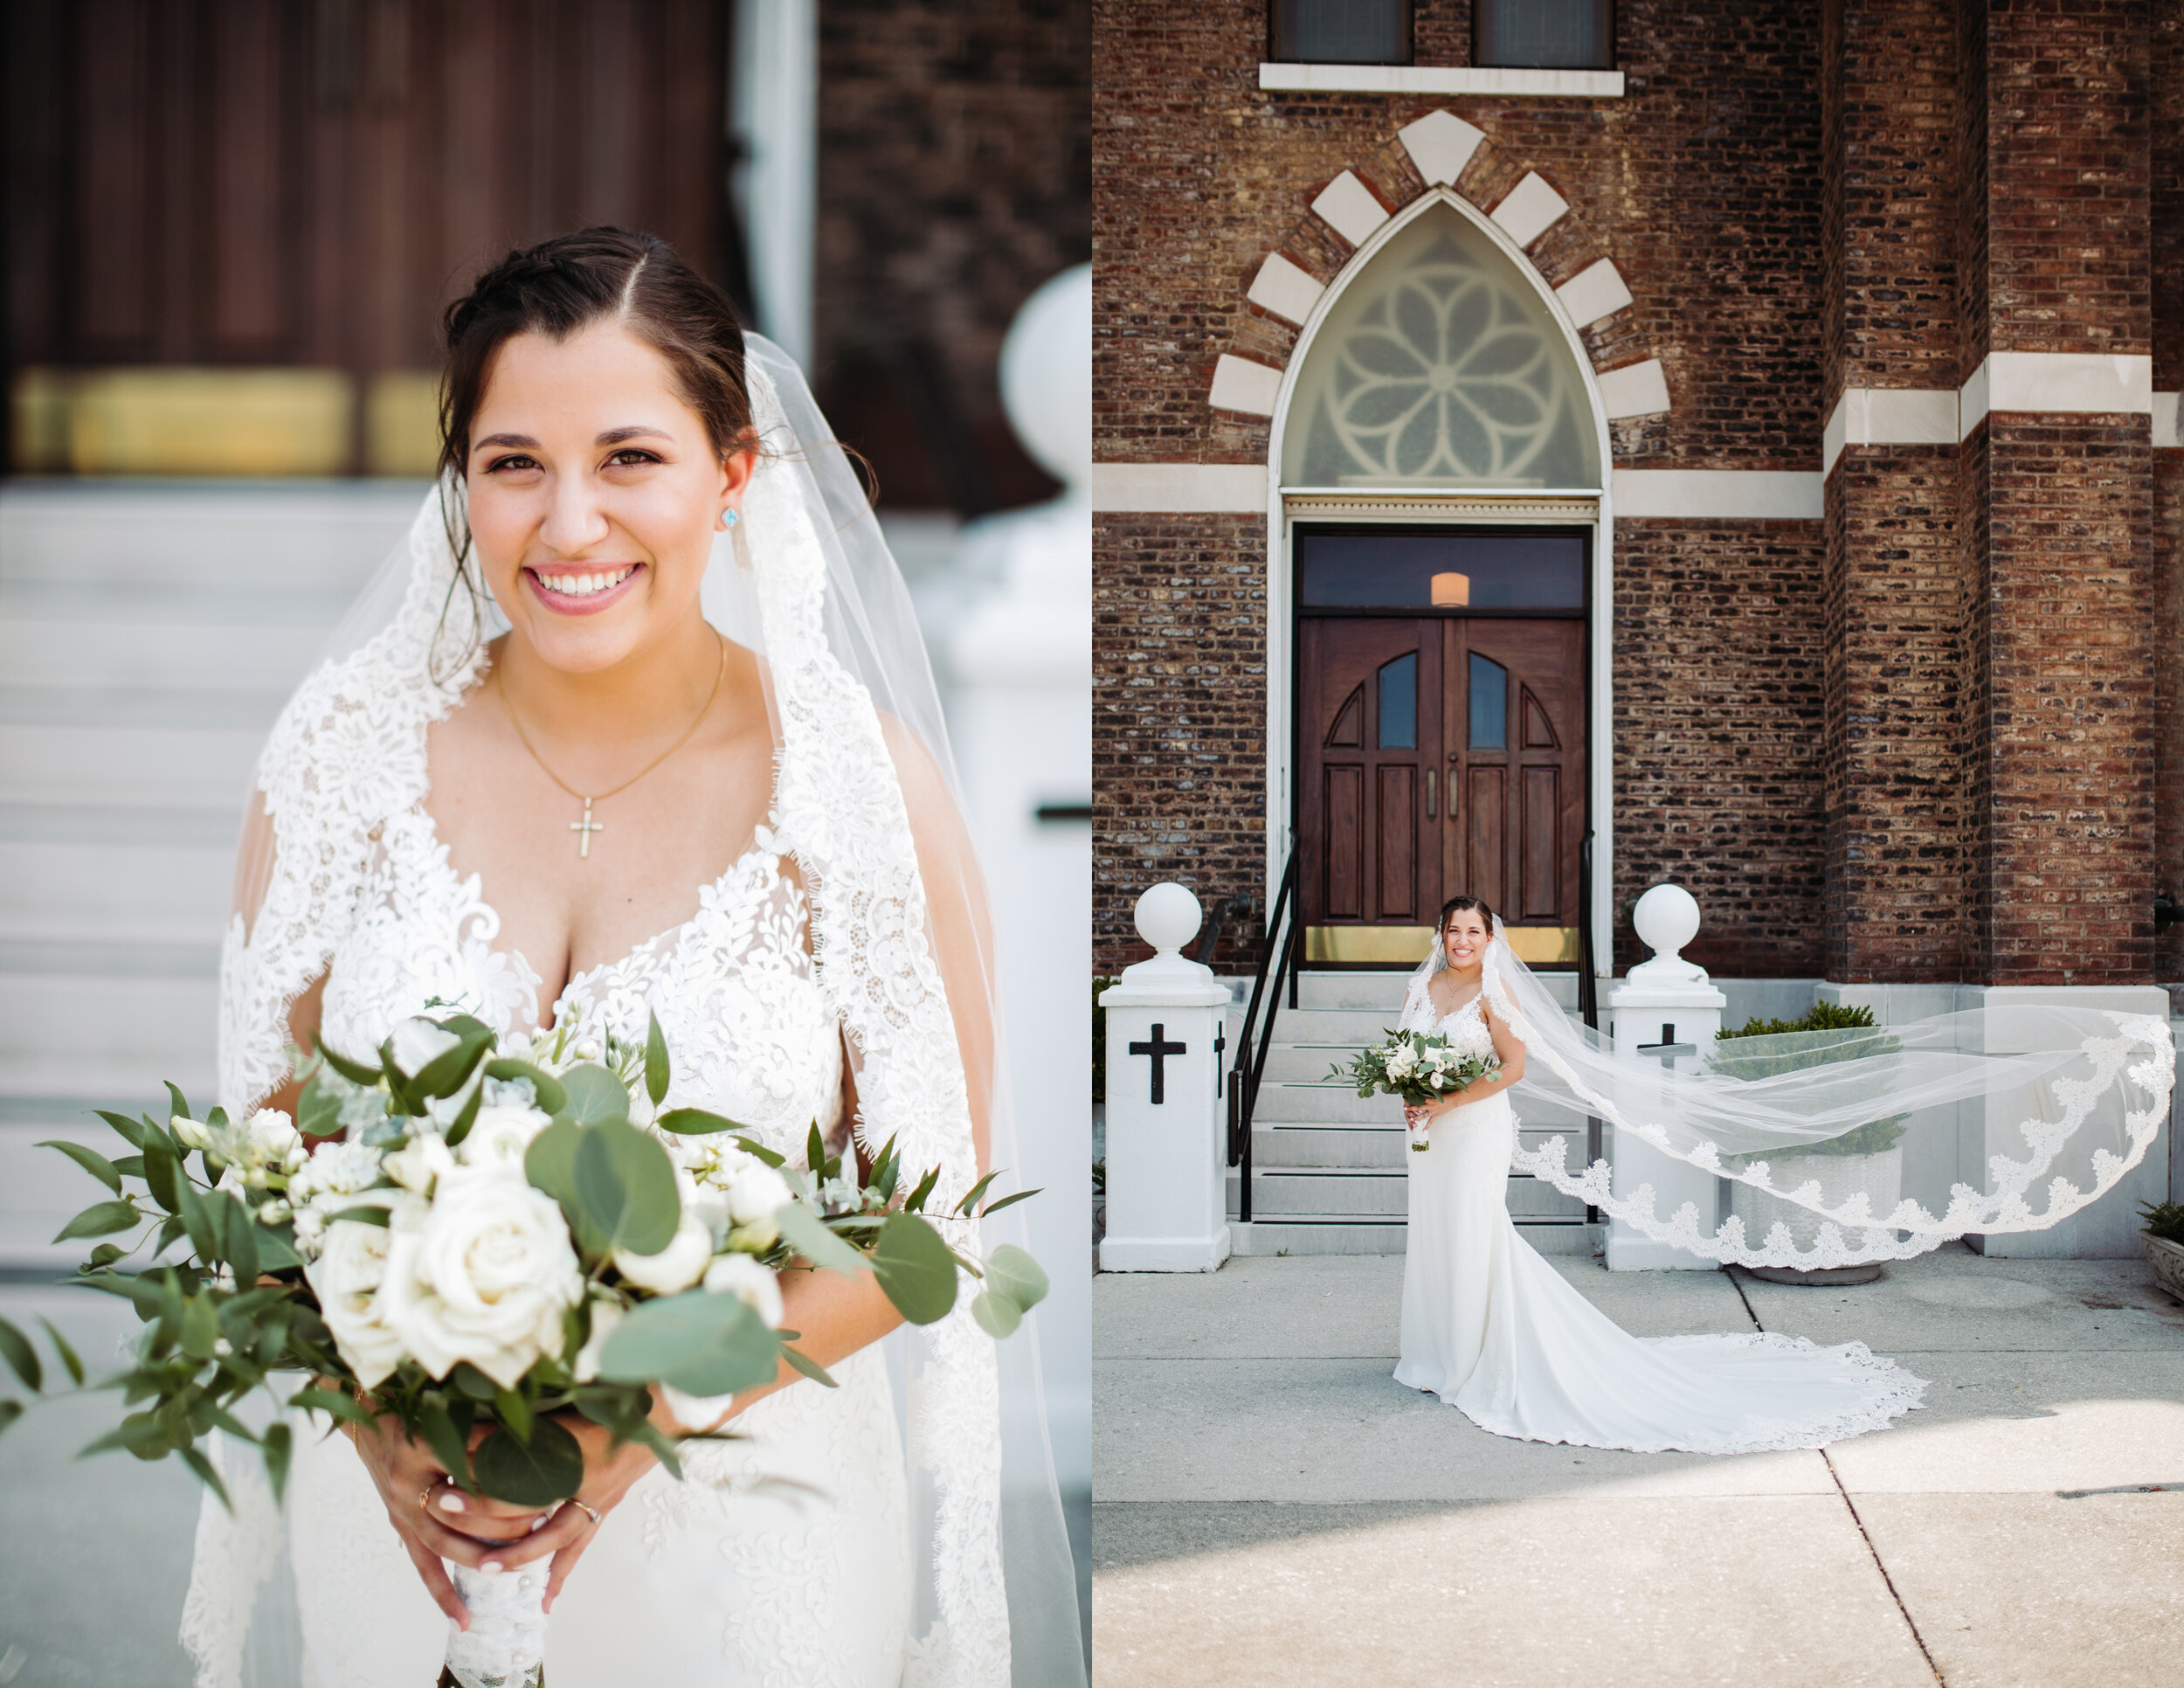 Bridal portraits before an elegant indoor summer wedding in Tennessee